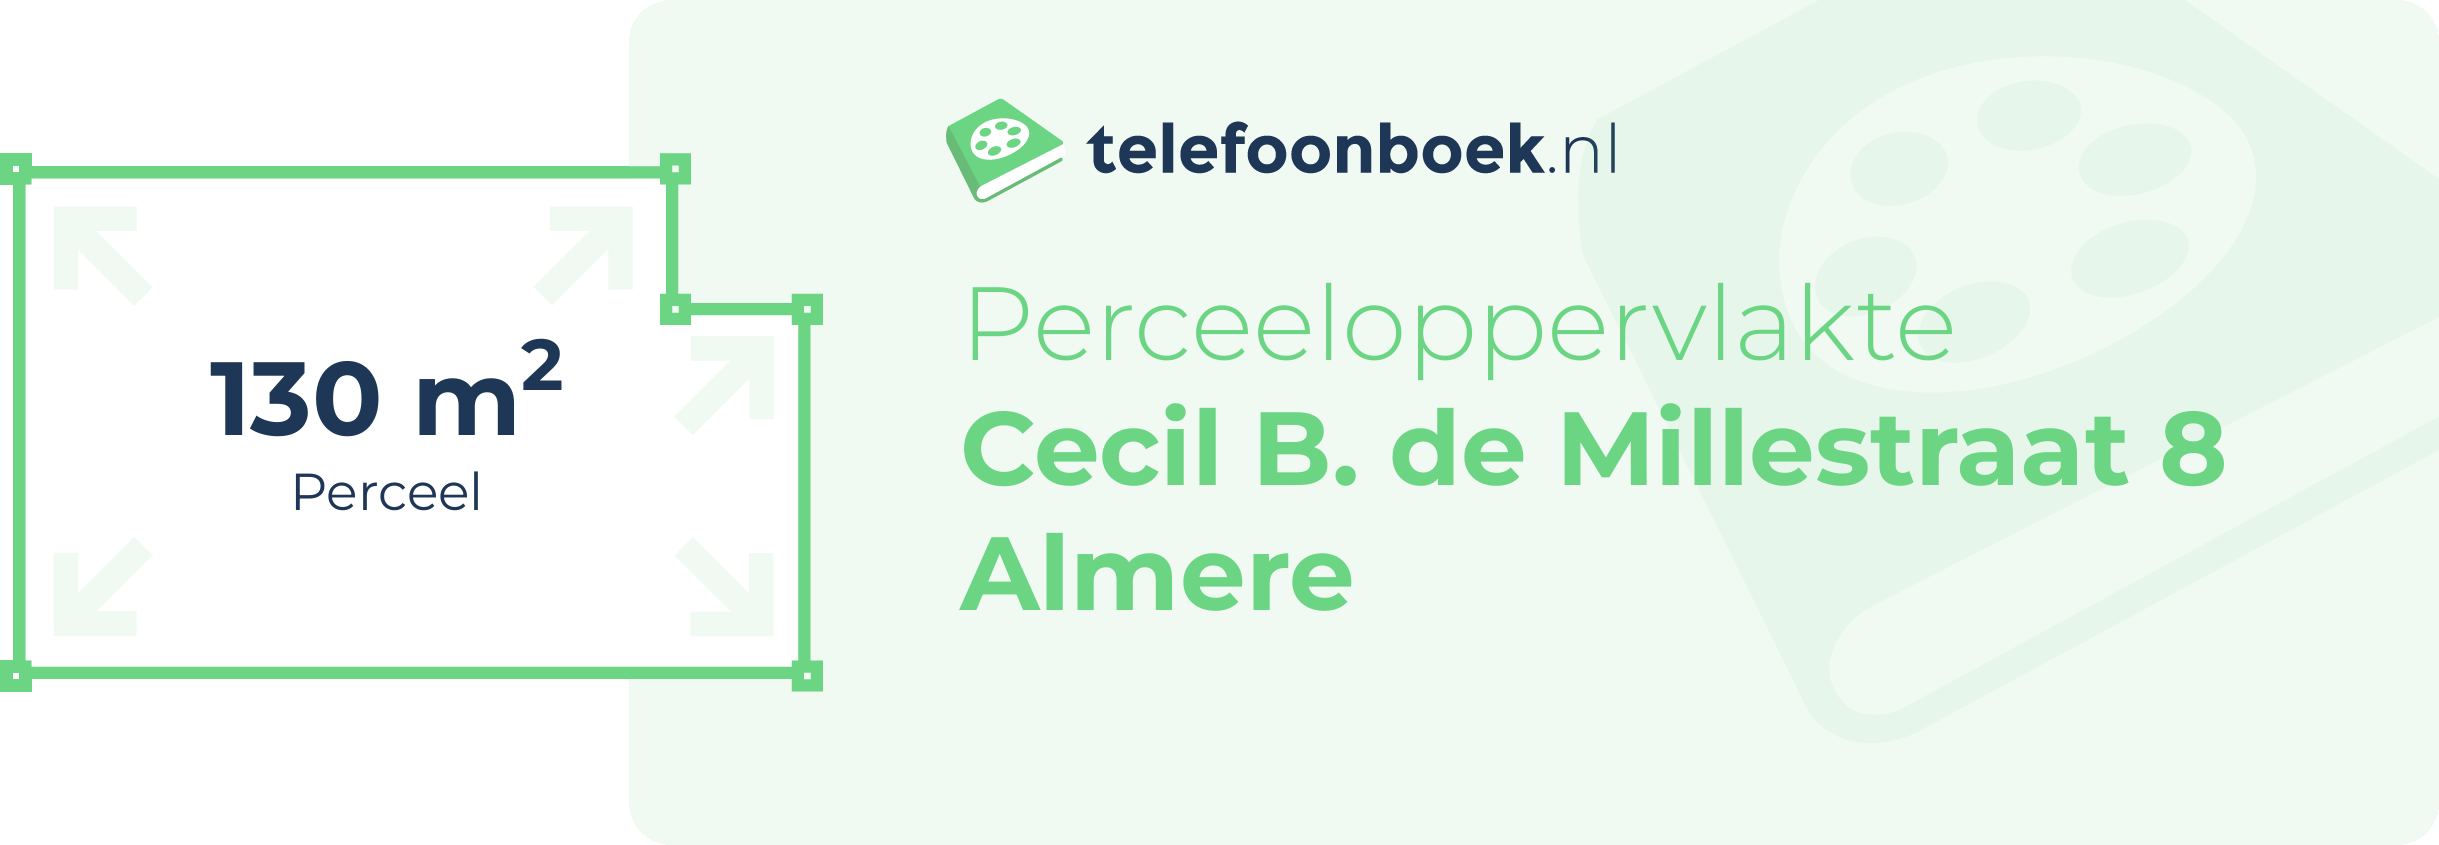 Perceeloppervlakte Cecil B. De Millestraat 8 Almere